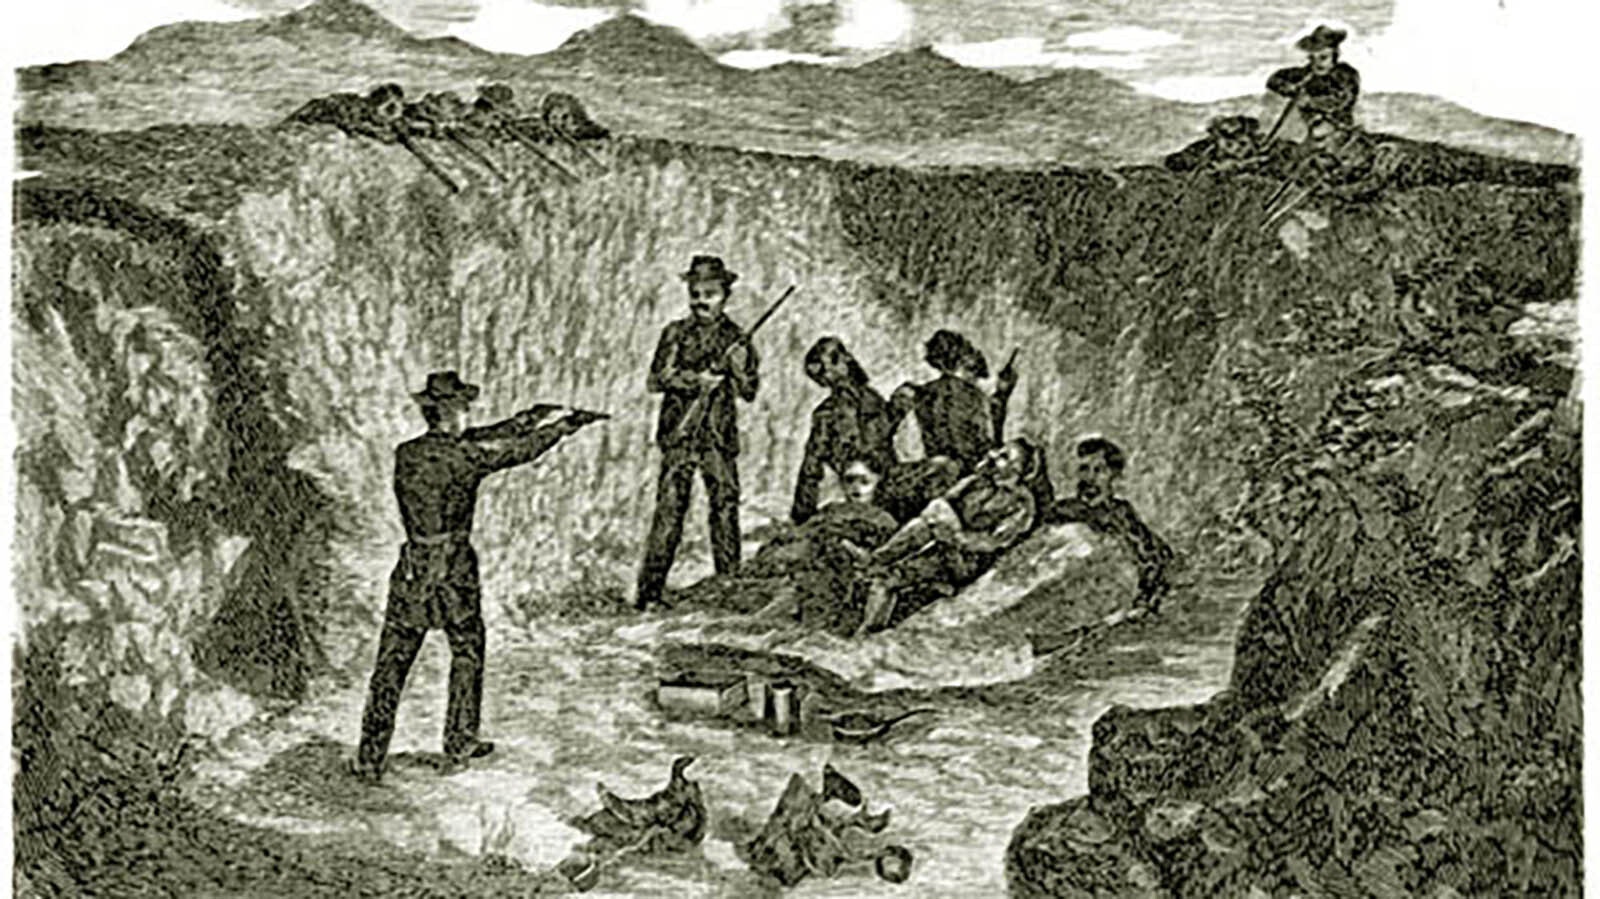 Capture of Dutch Charley's Gang near Rattlesnake Canyon, Elk Mountain, Wyoming Territory.